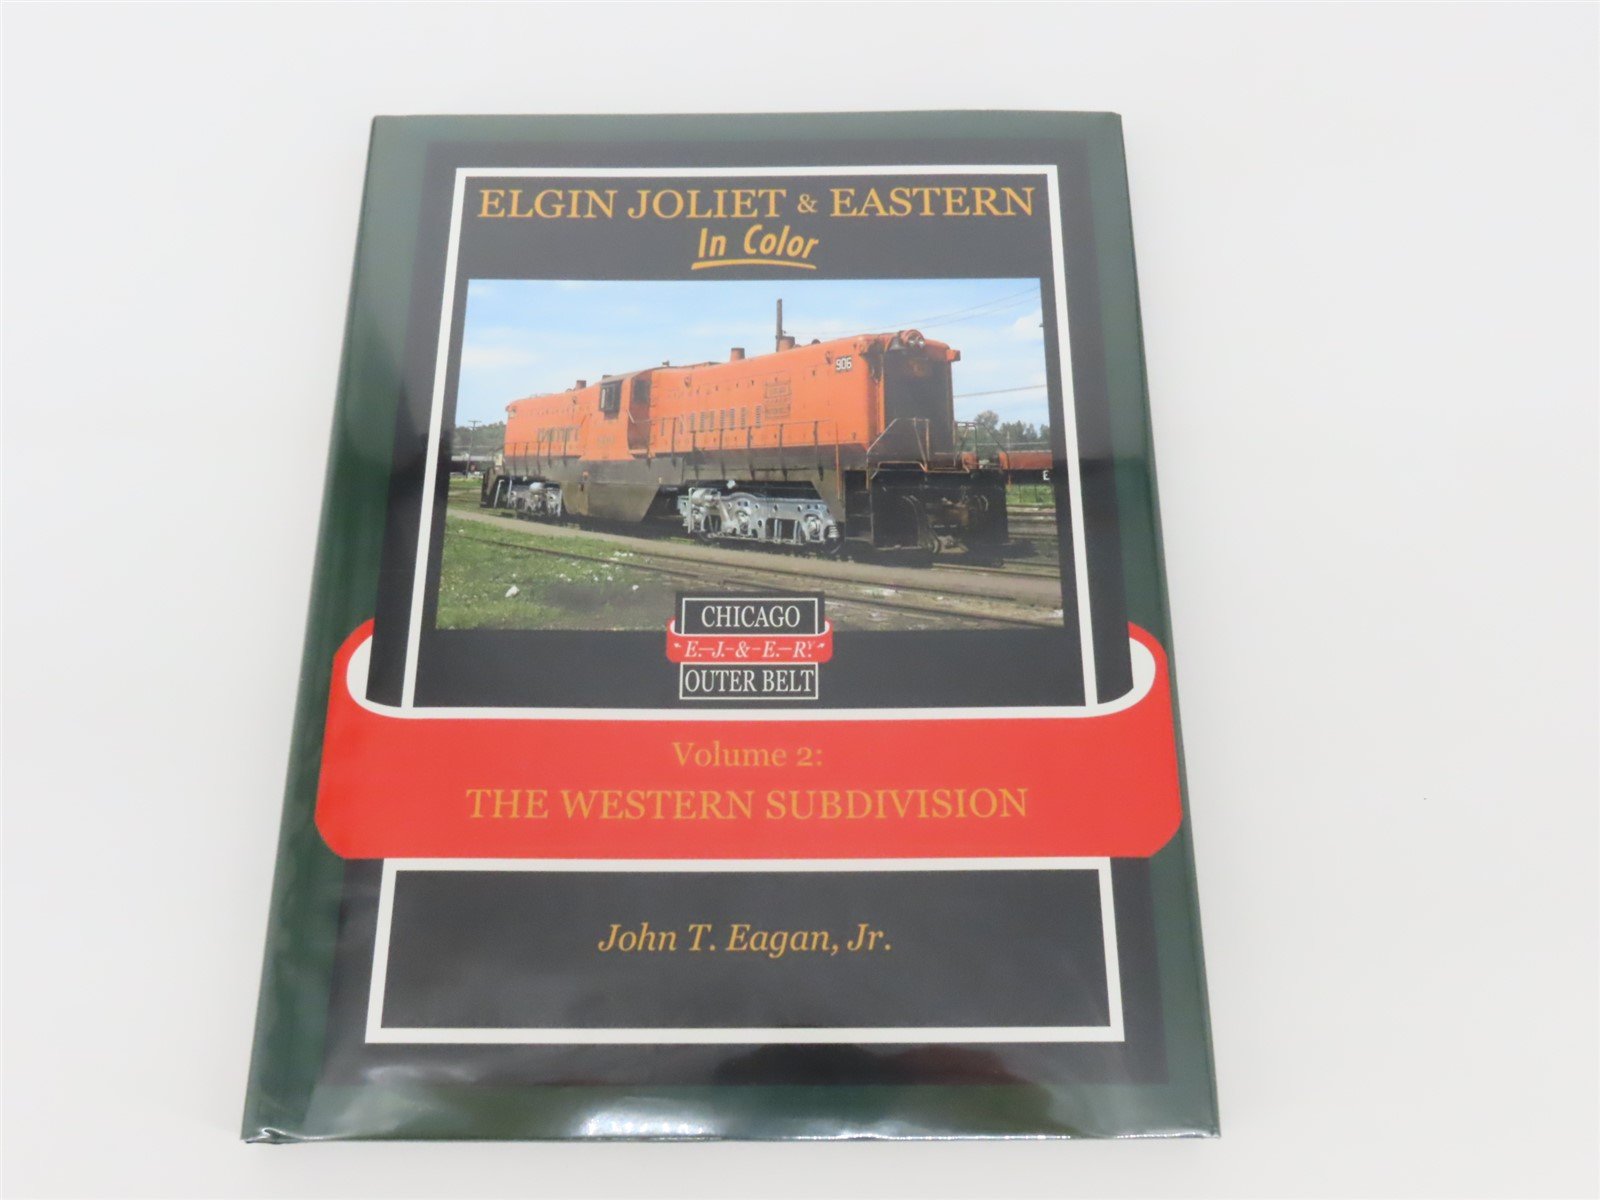 Morning Sun: Elgin Joliet & Eastern Volume 2 by John T Eagan, Jr ©2014 HC Book